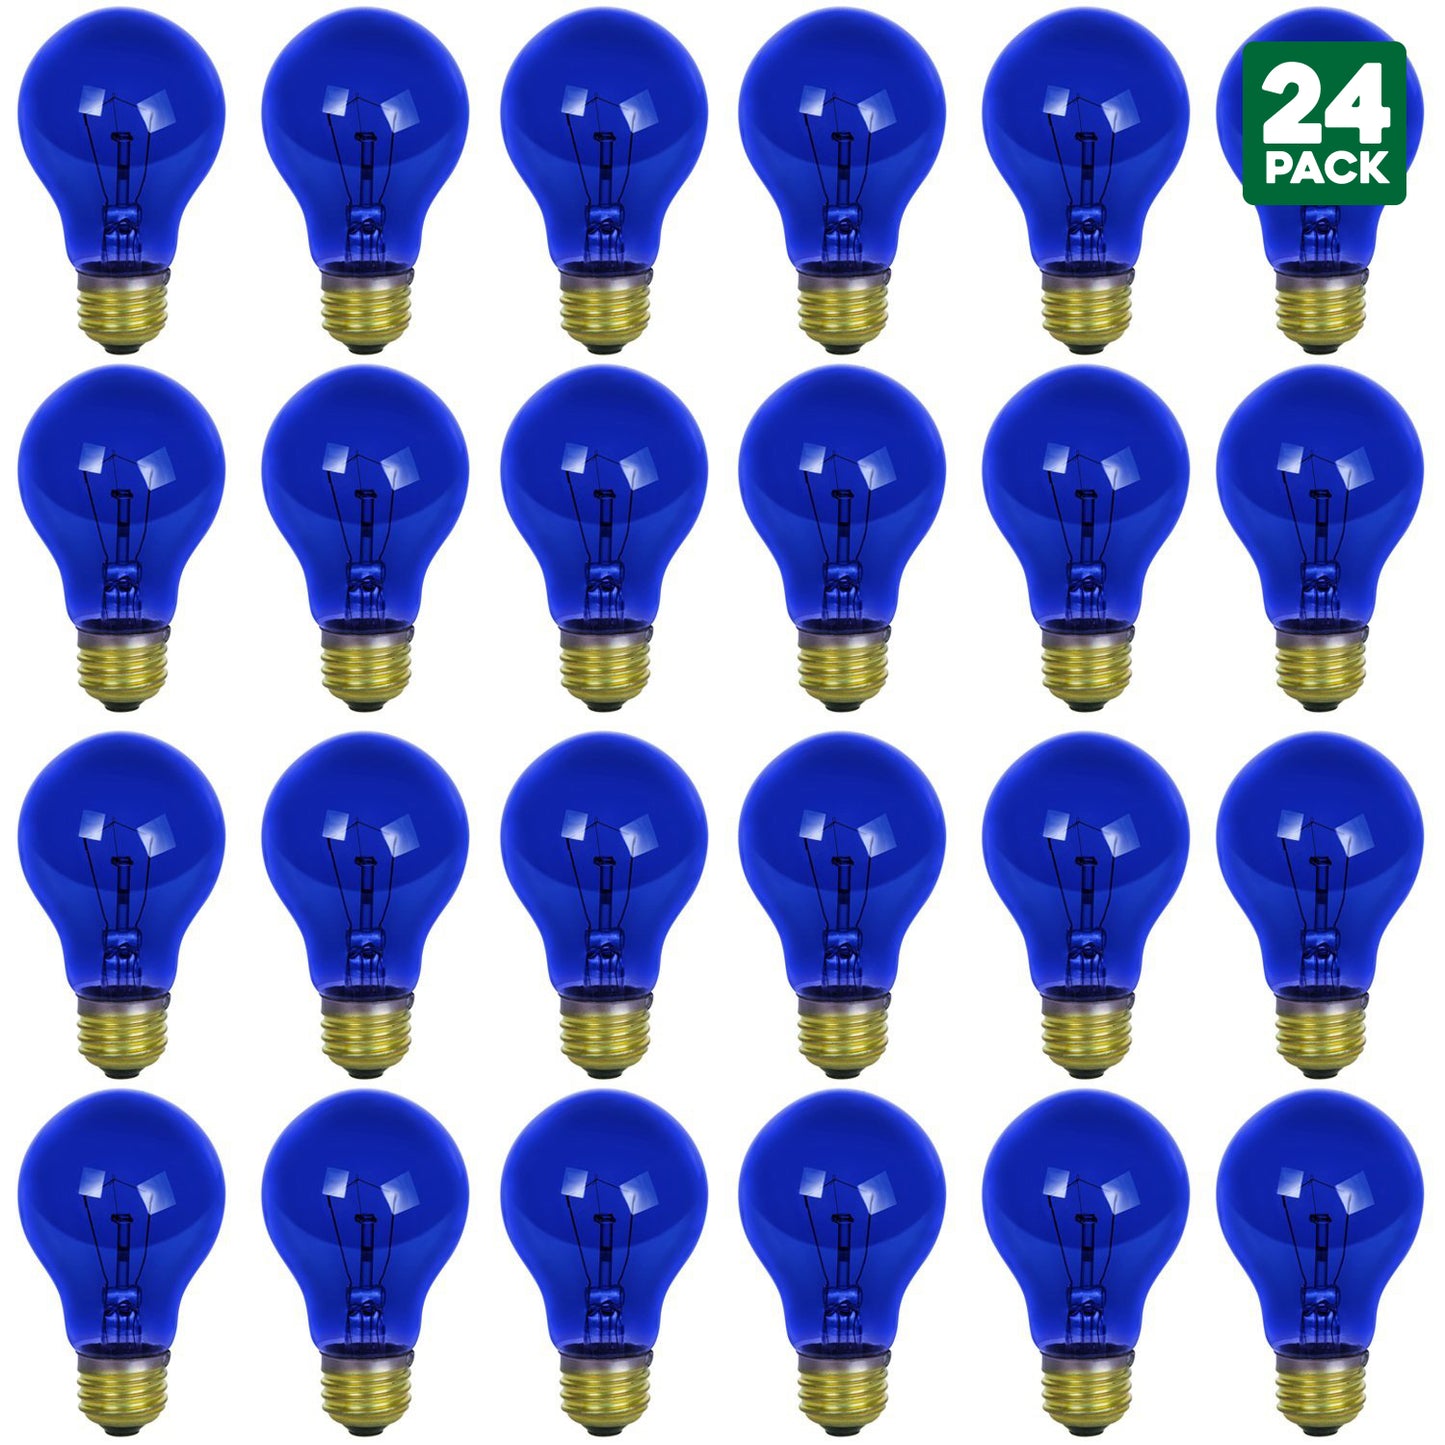 2 Pack of Sunlite 25 Watt A19 Colored, Medium Base, Transparent Blue